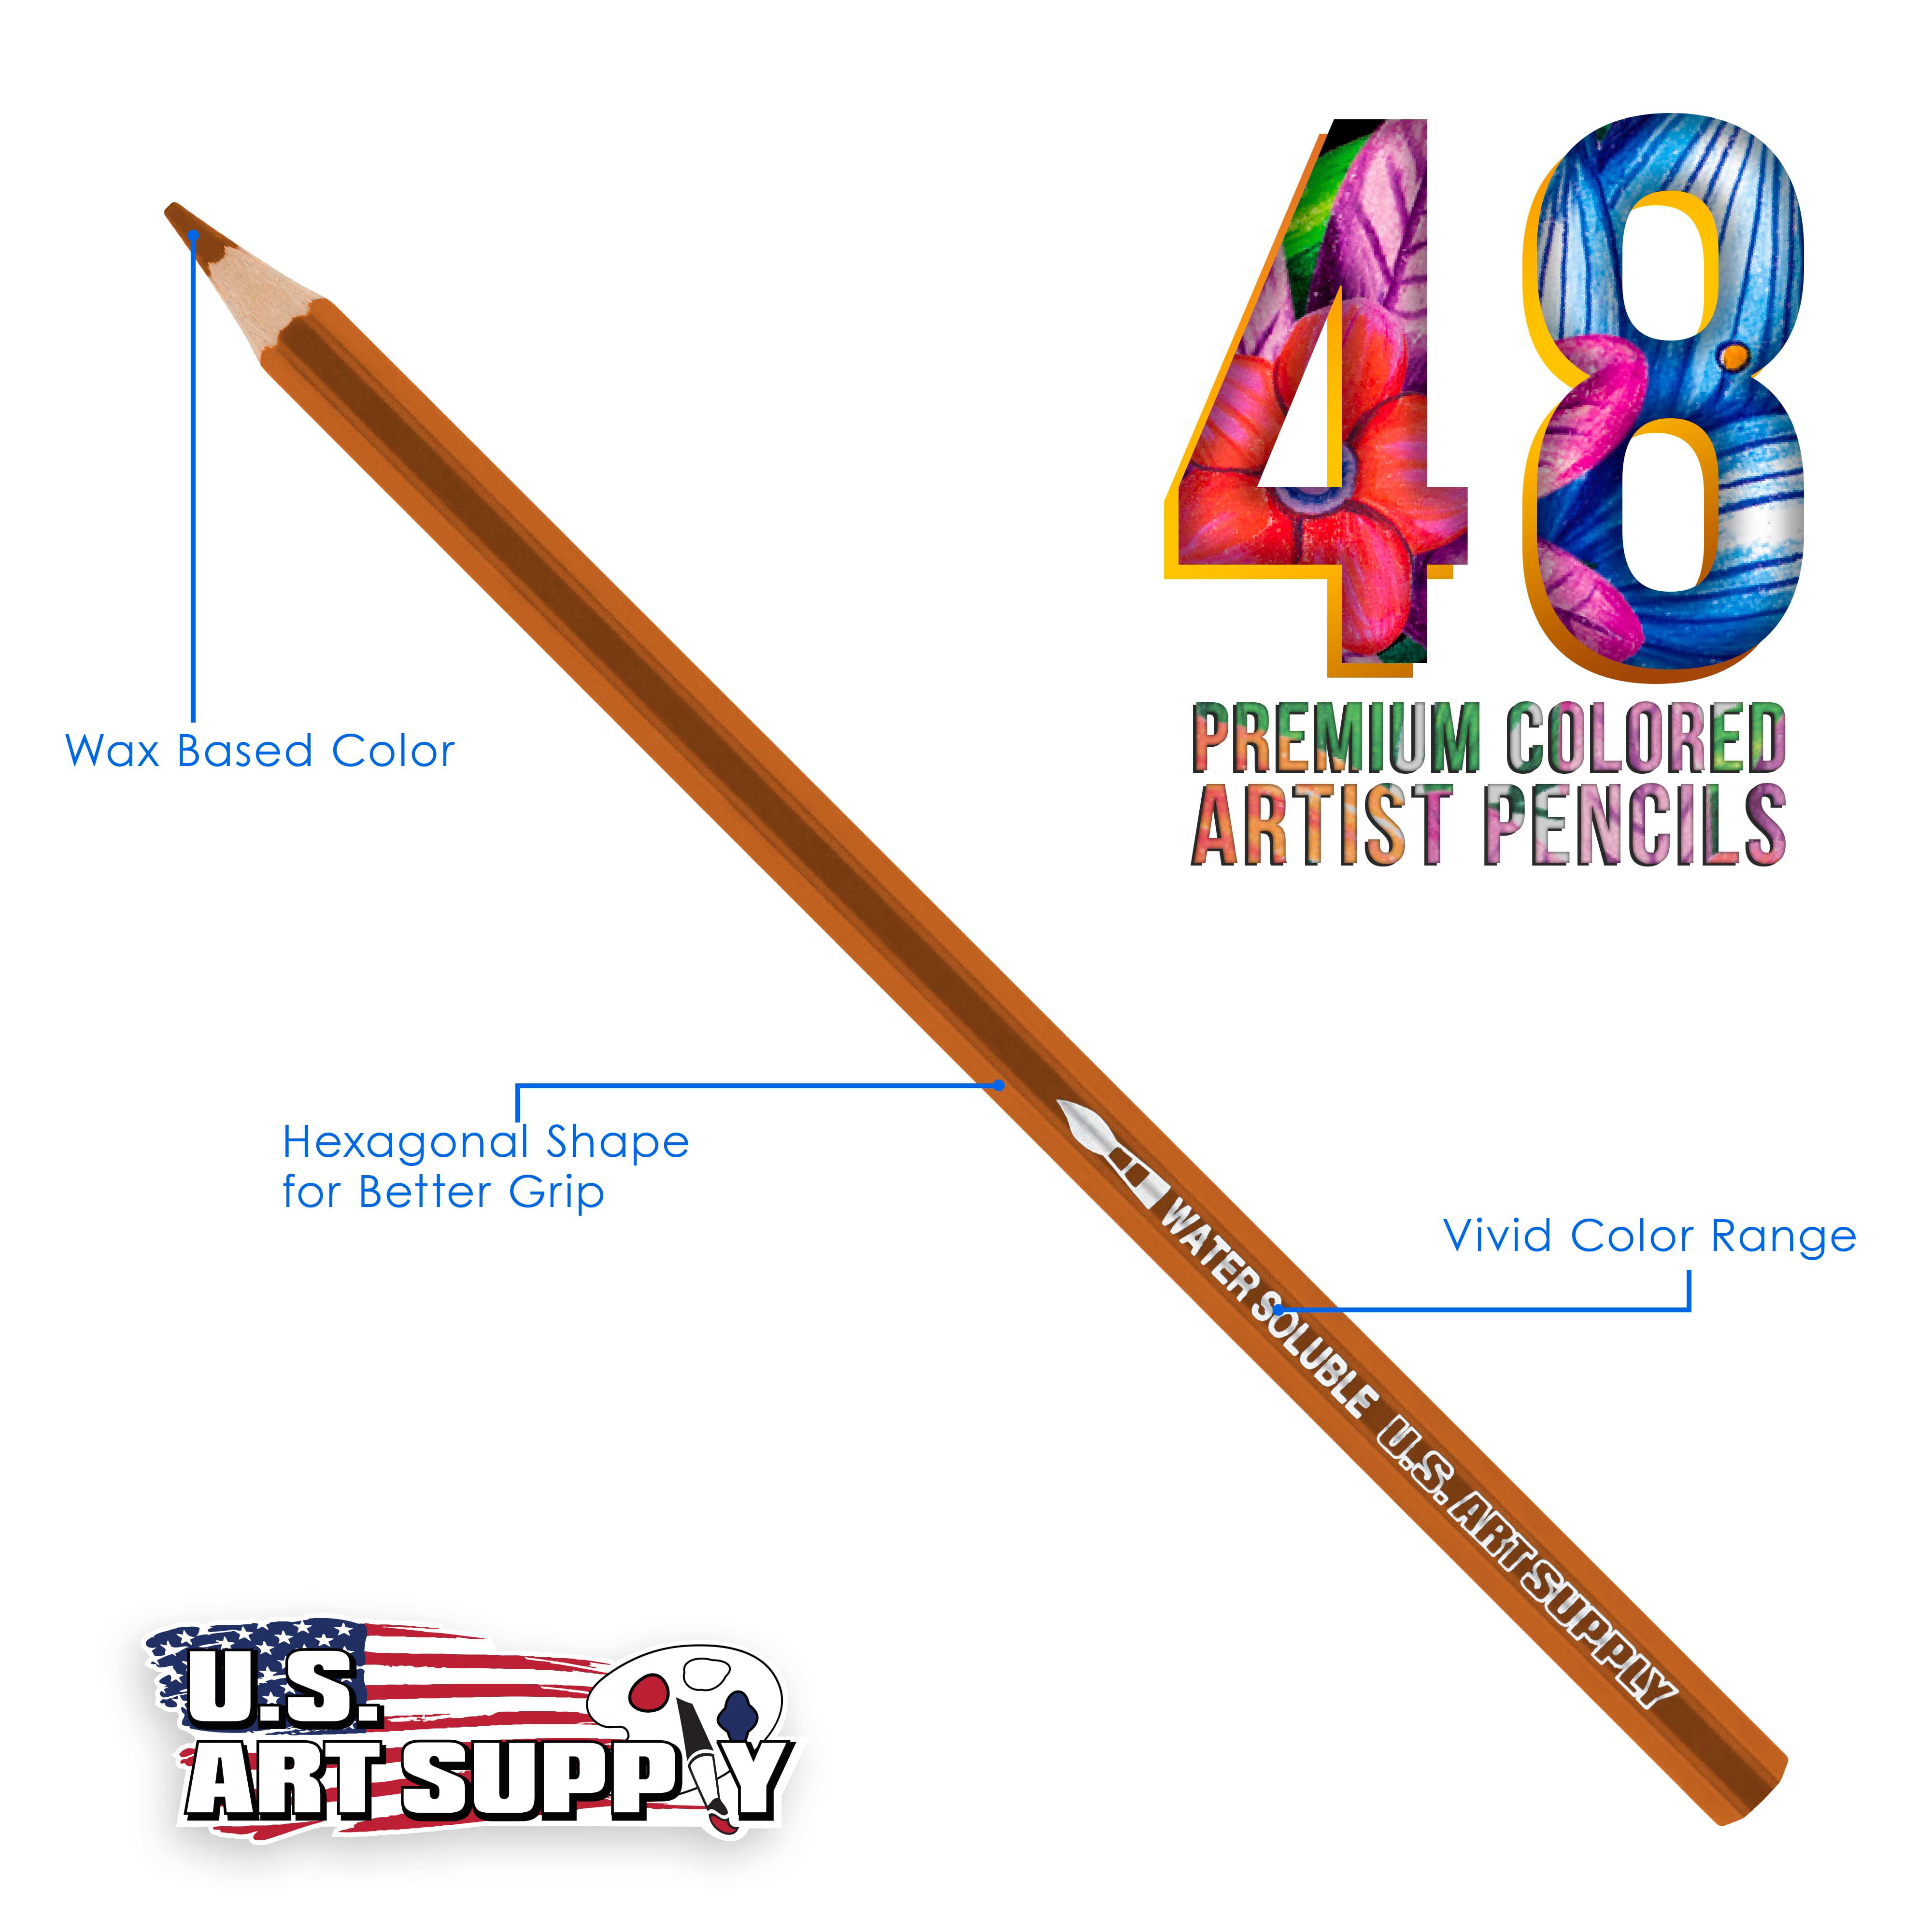 48 Watercolor Pencils, Derwent Inktense Watercolor Water Soluble Pencils  4mm Core Derwent Drawing Watercolor Pencil, Wooden Gift Box 